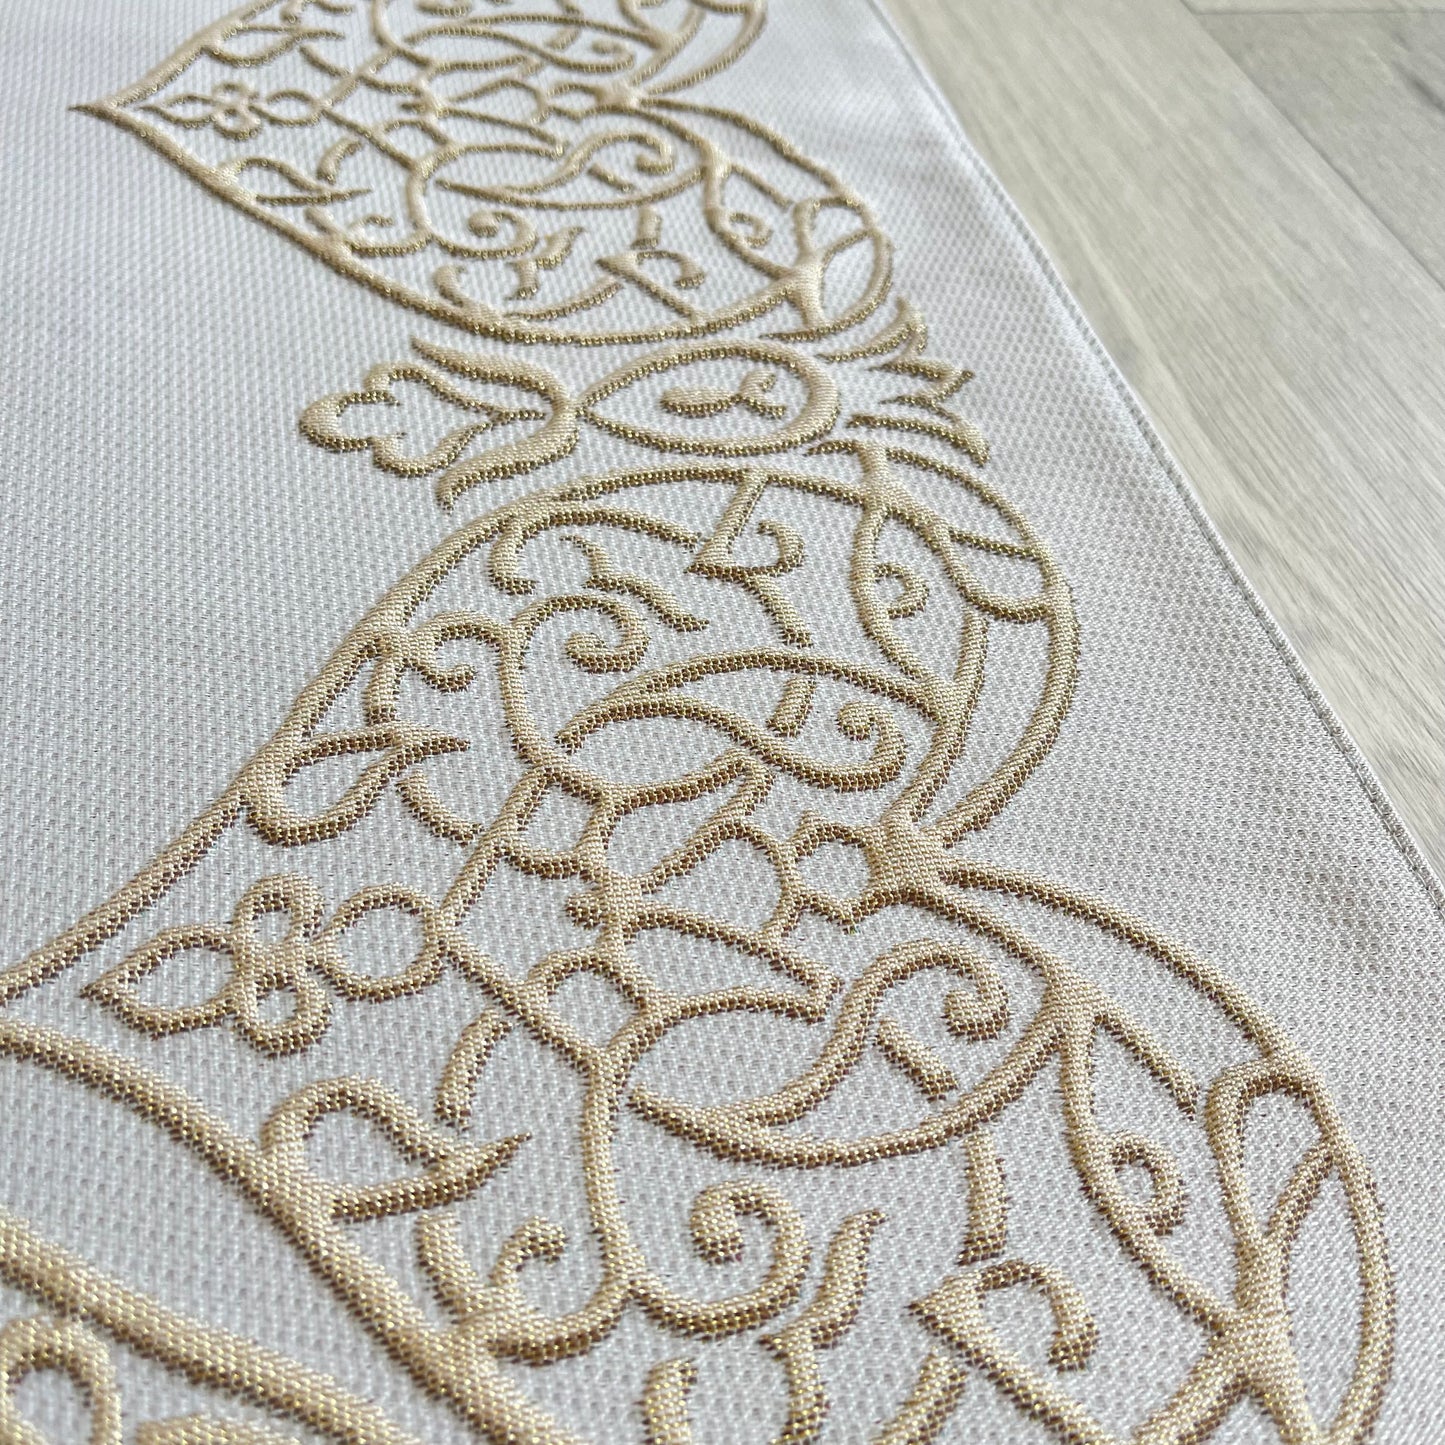 Royal Sejadah - Luxury Prayer Mat & Tasbih - White Classic Design